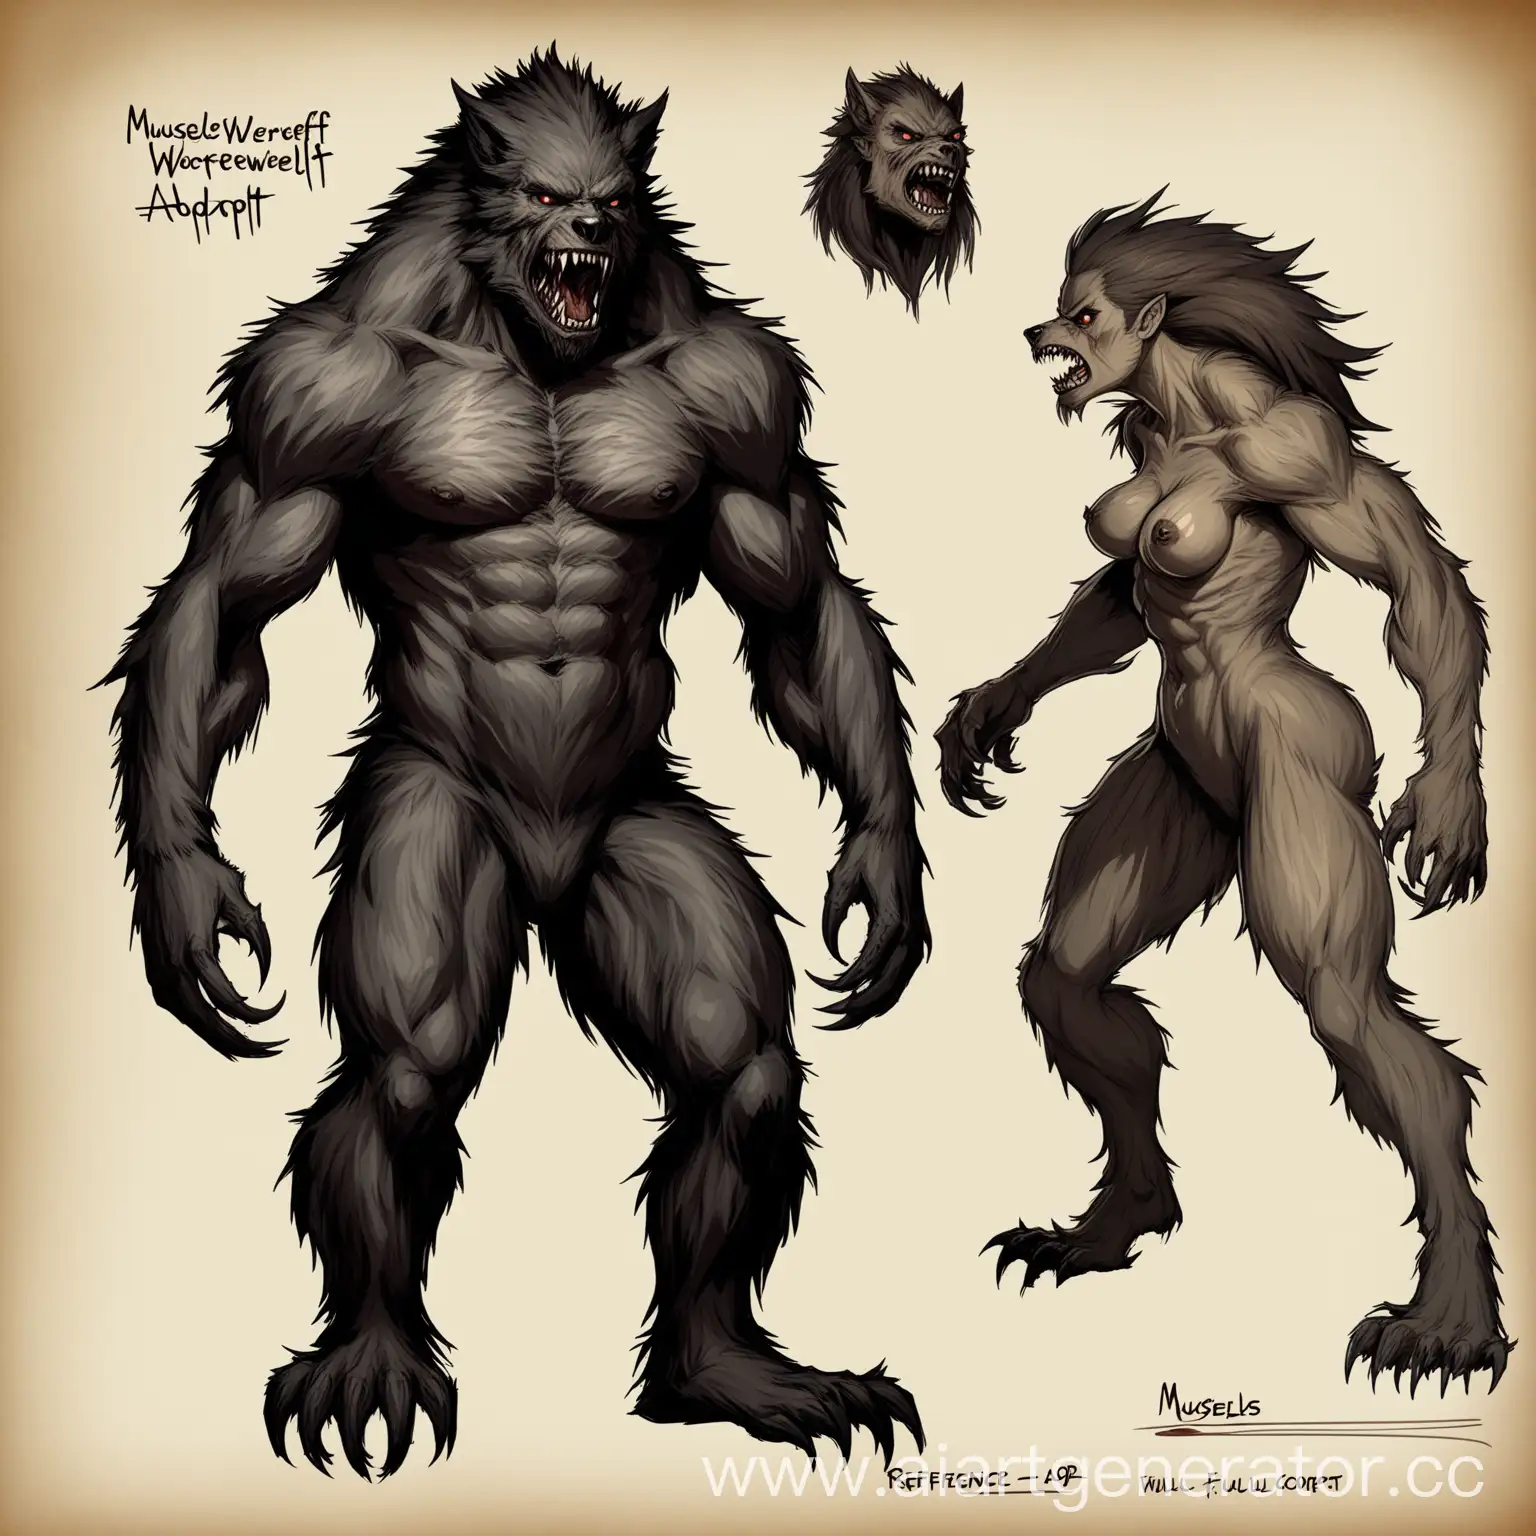 Powerful-Muscular-Werewolf-Woman-Concept-Art-for-Adoption